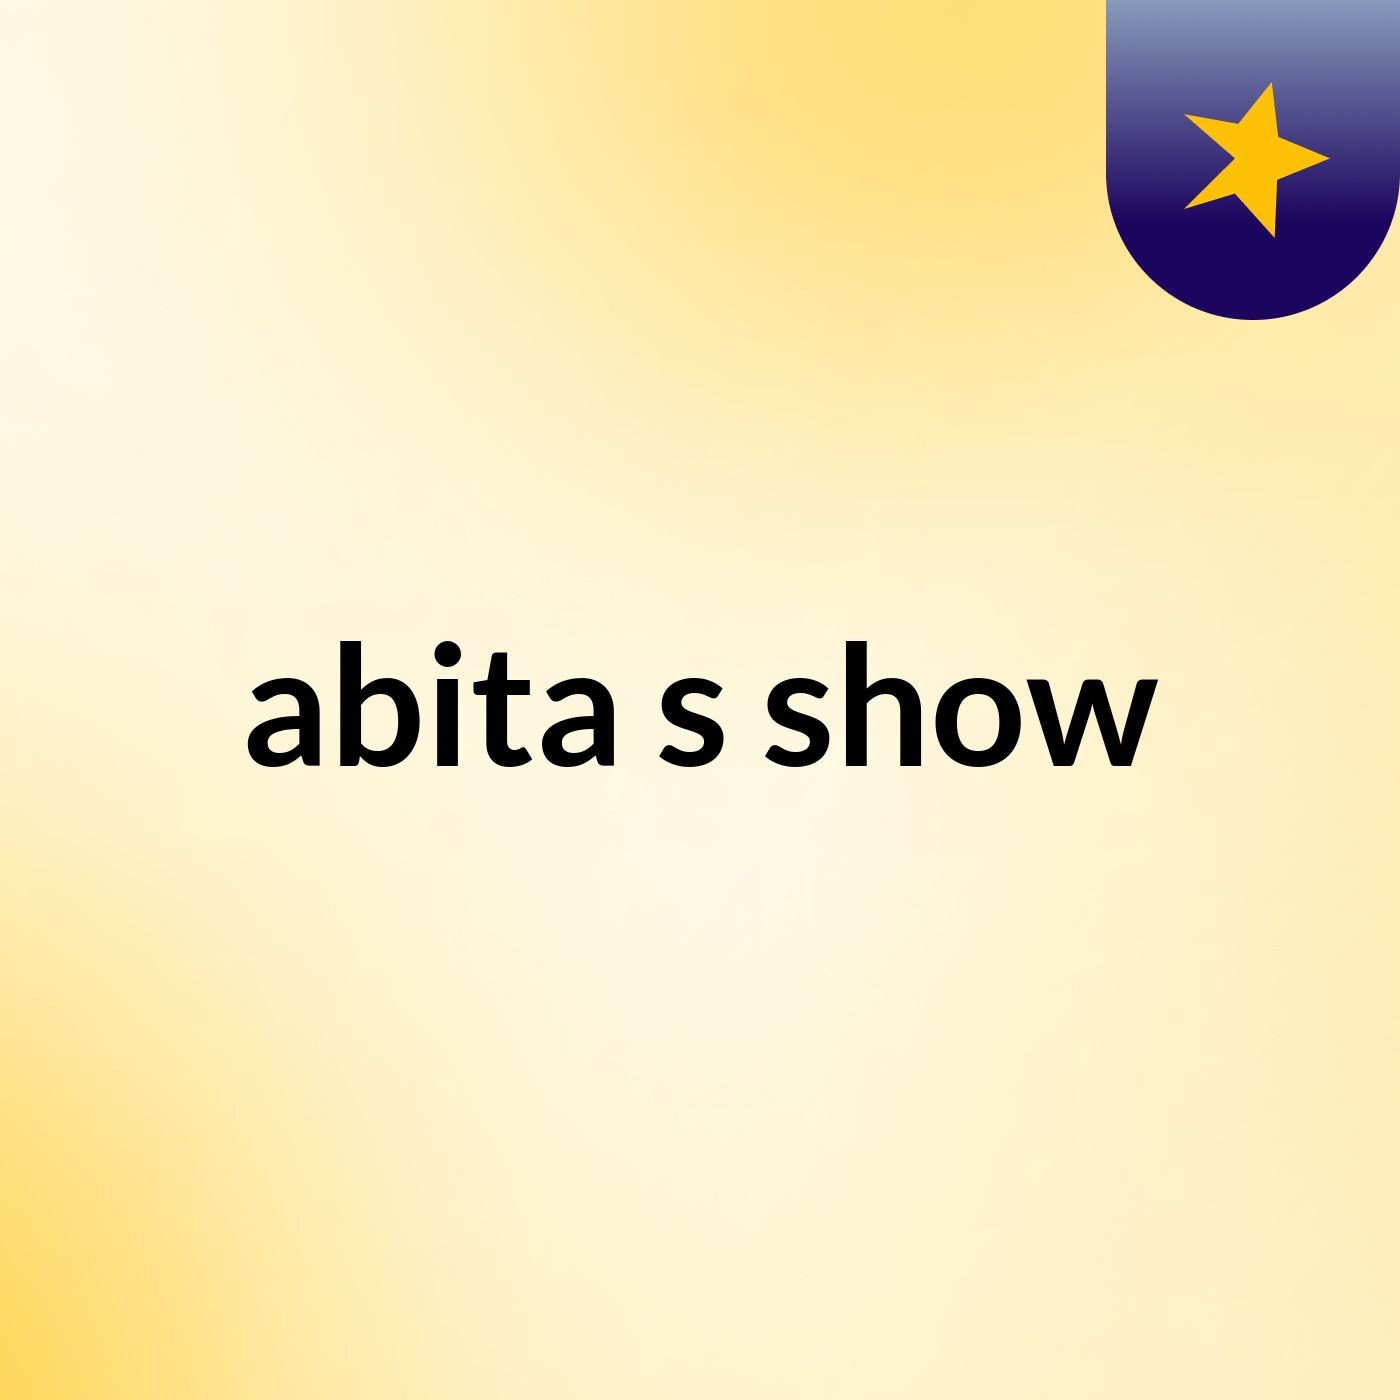 abita's show